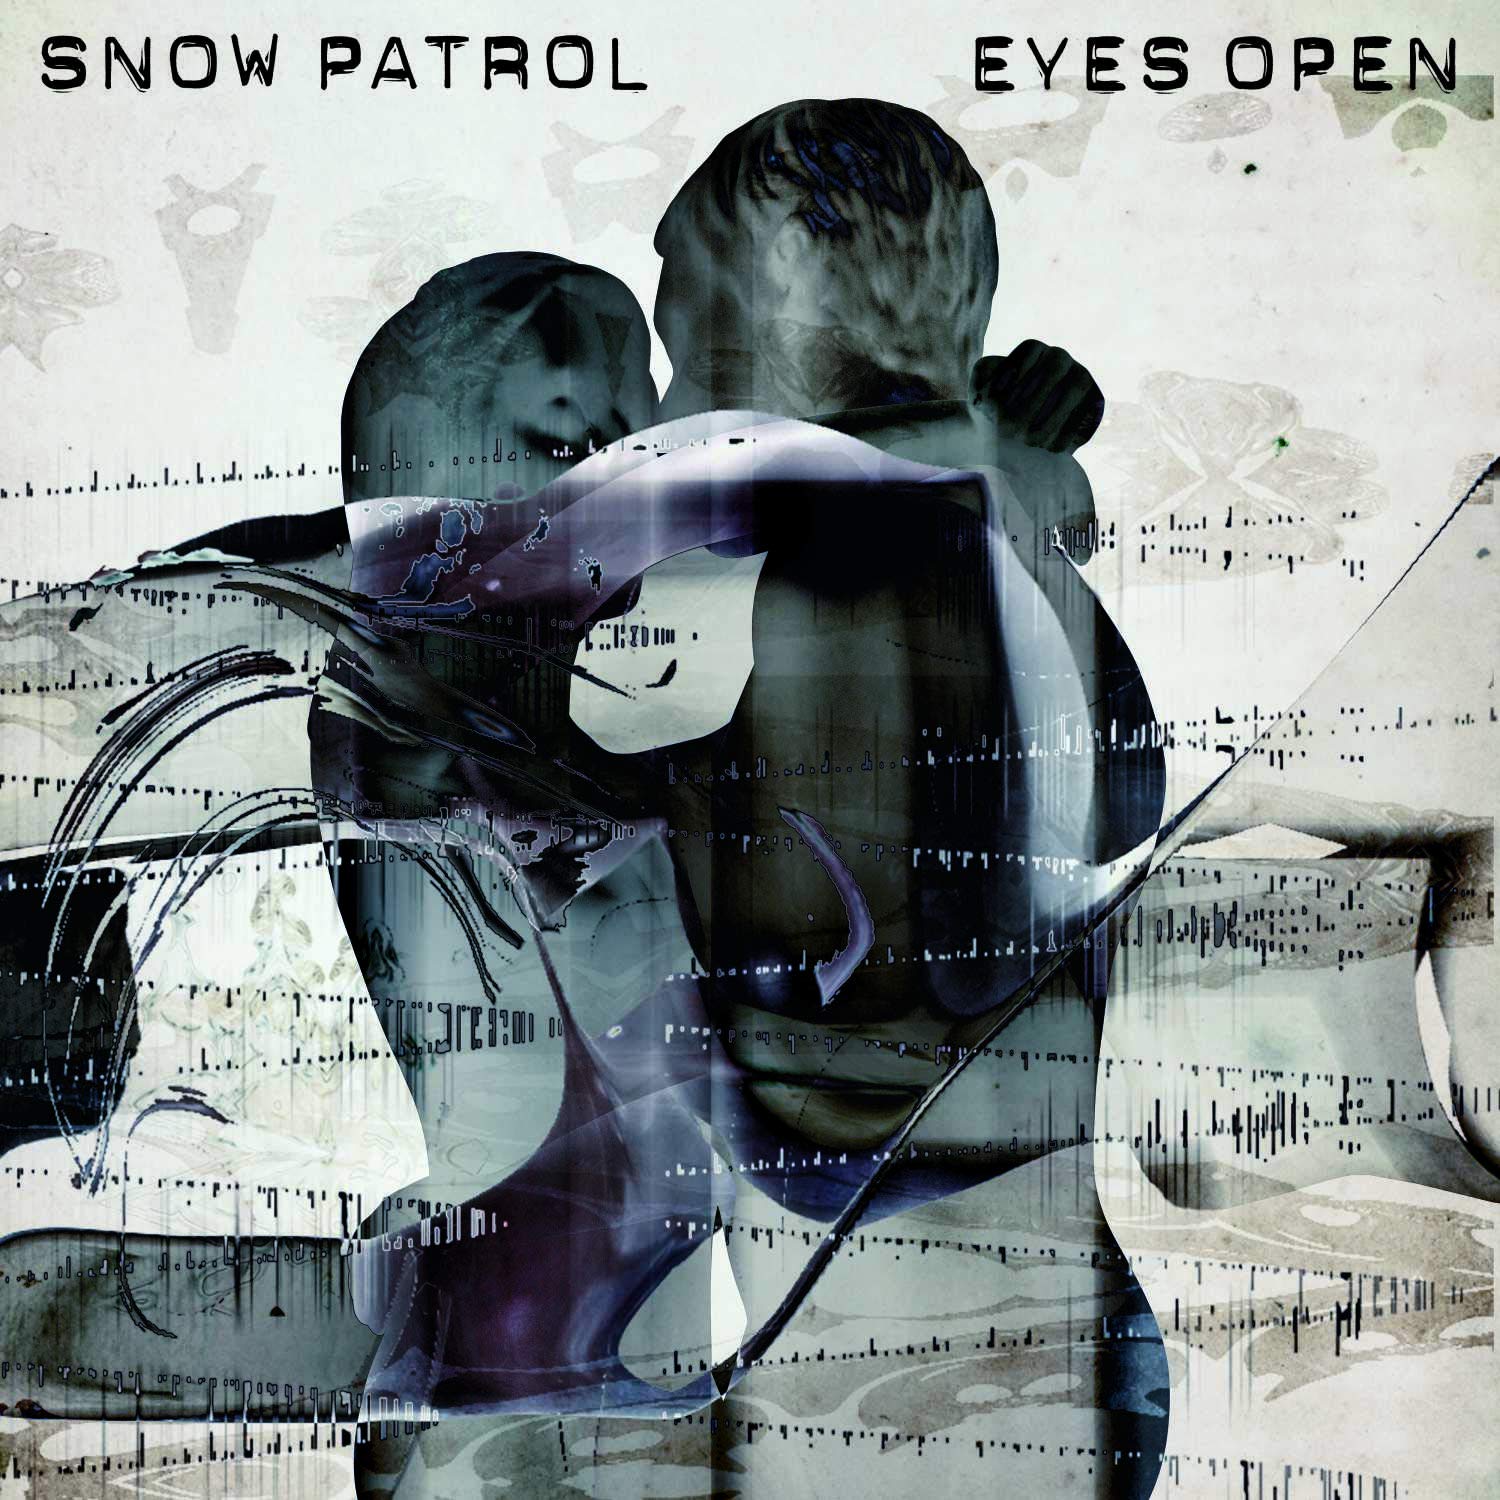 Snow Patrol - Eyes Open vinyl cover